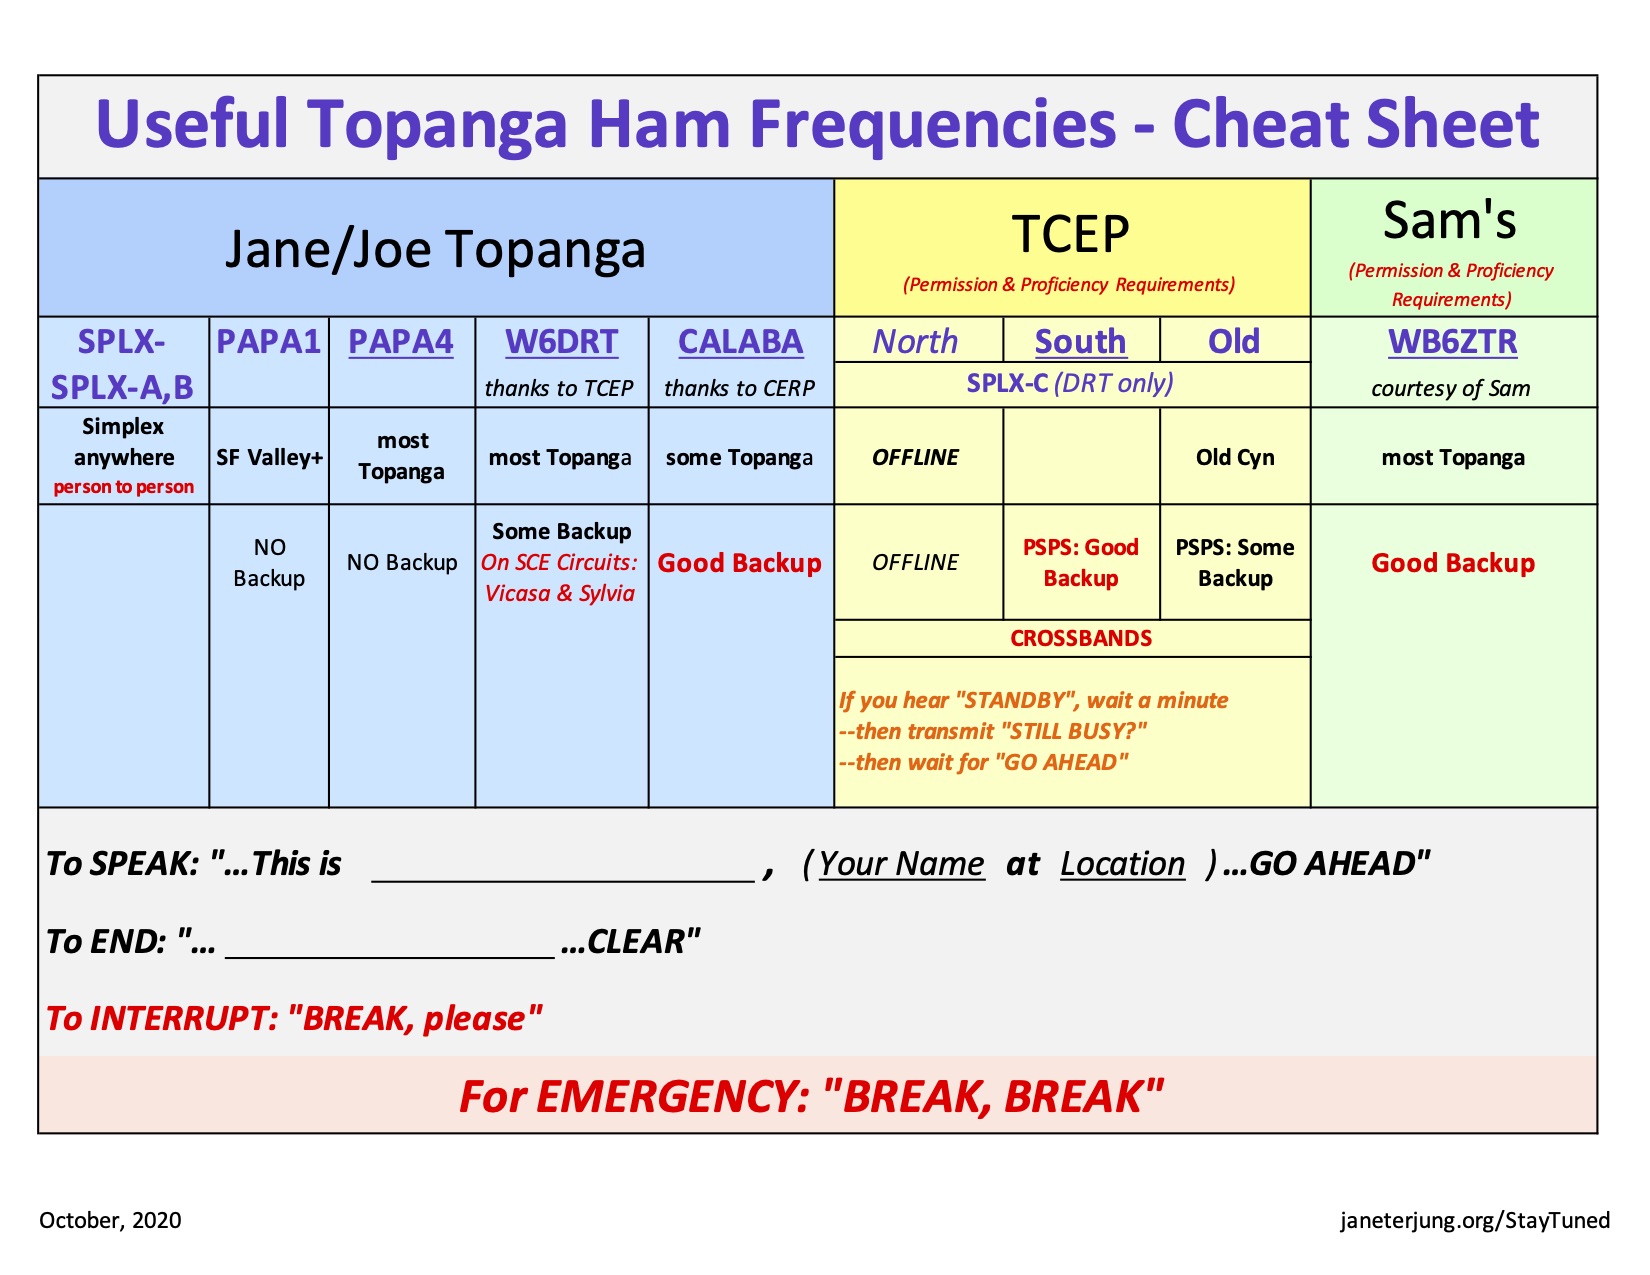 Useful Topanga Ham Radio Frequency Cheat Sheet